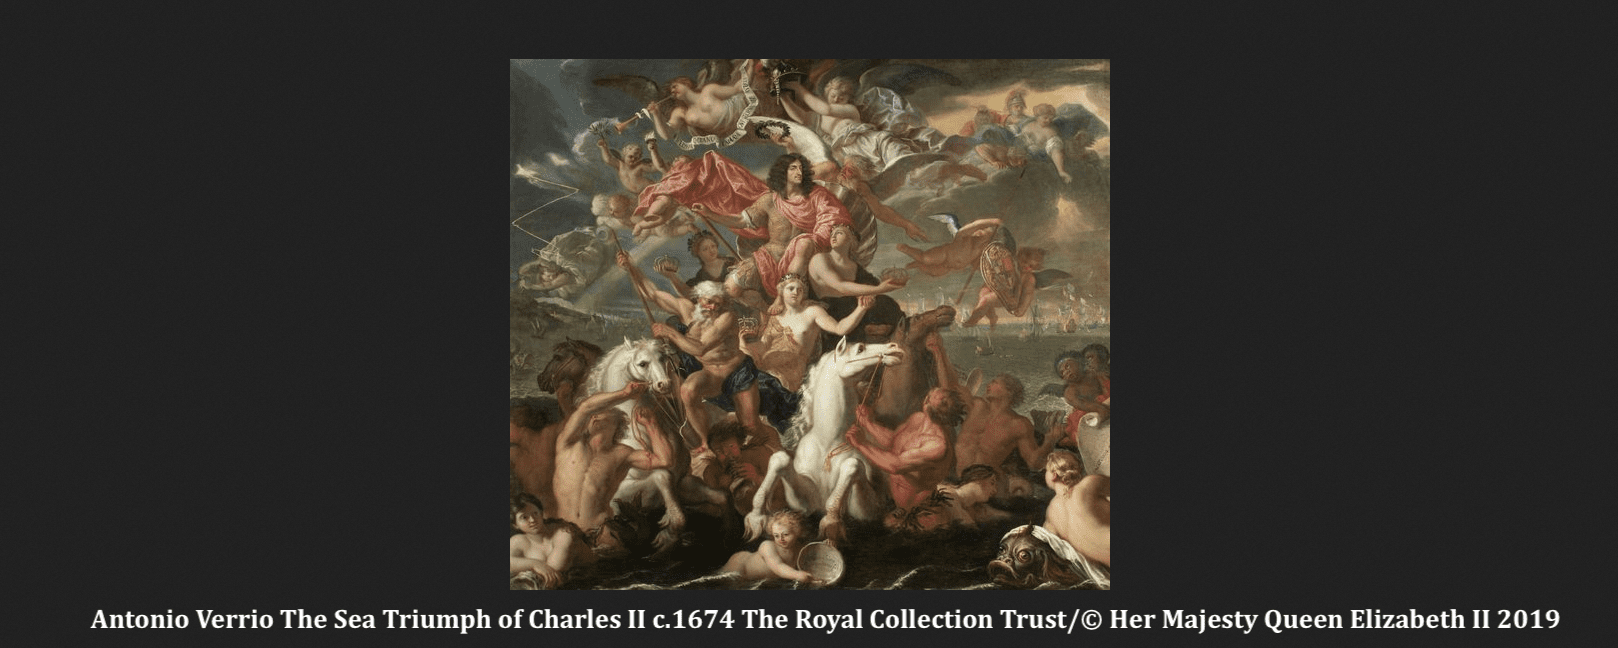 Antonio Verrio The Sea Triumph of Charles II c.1674 The Royal Collection Trust/© Her Majesty Queen Elizabeth II 2019